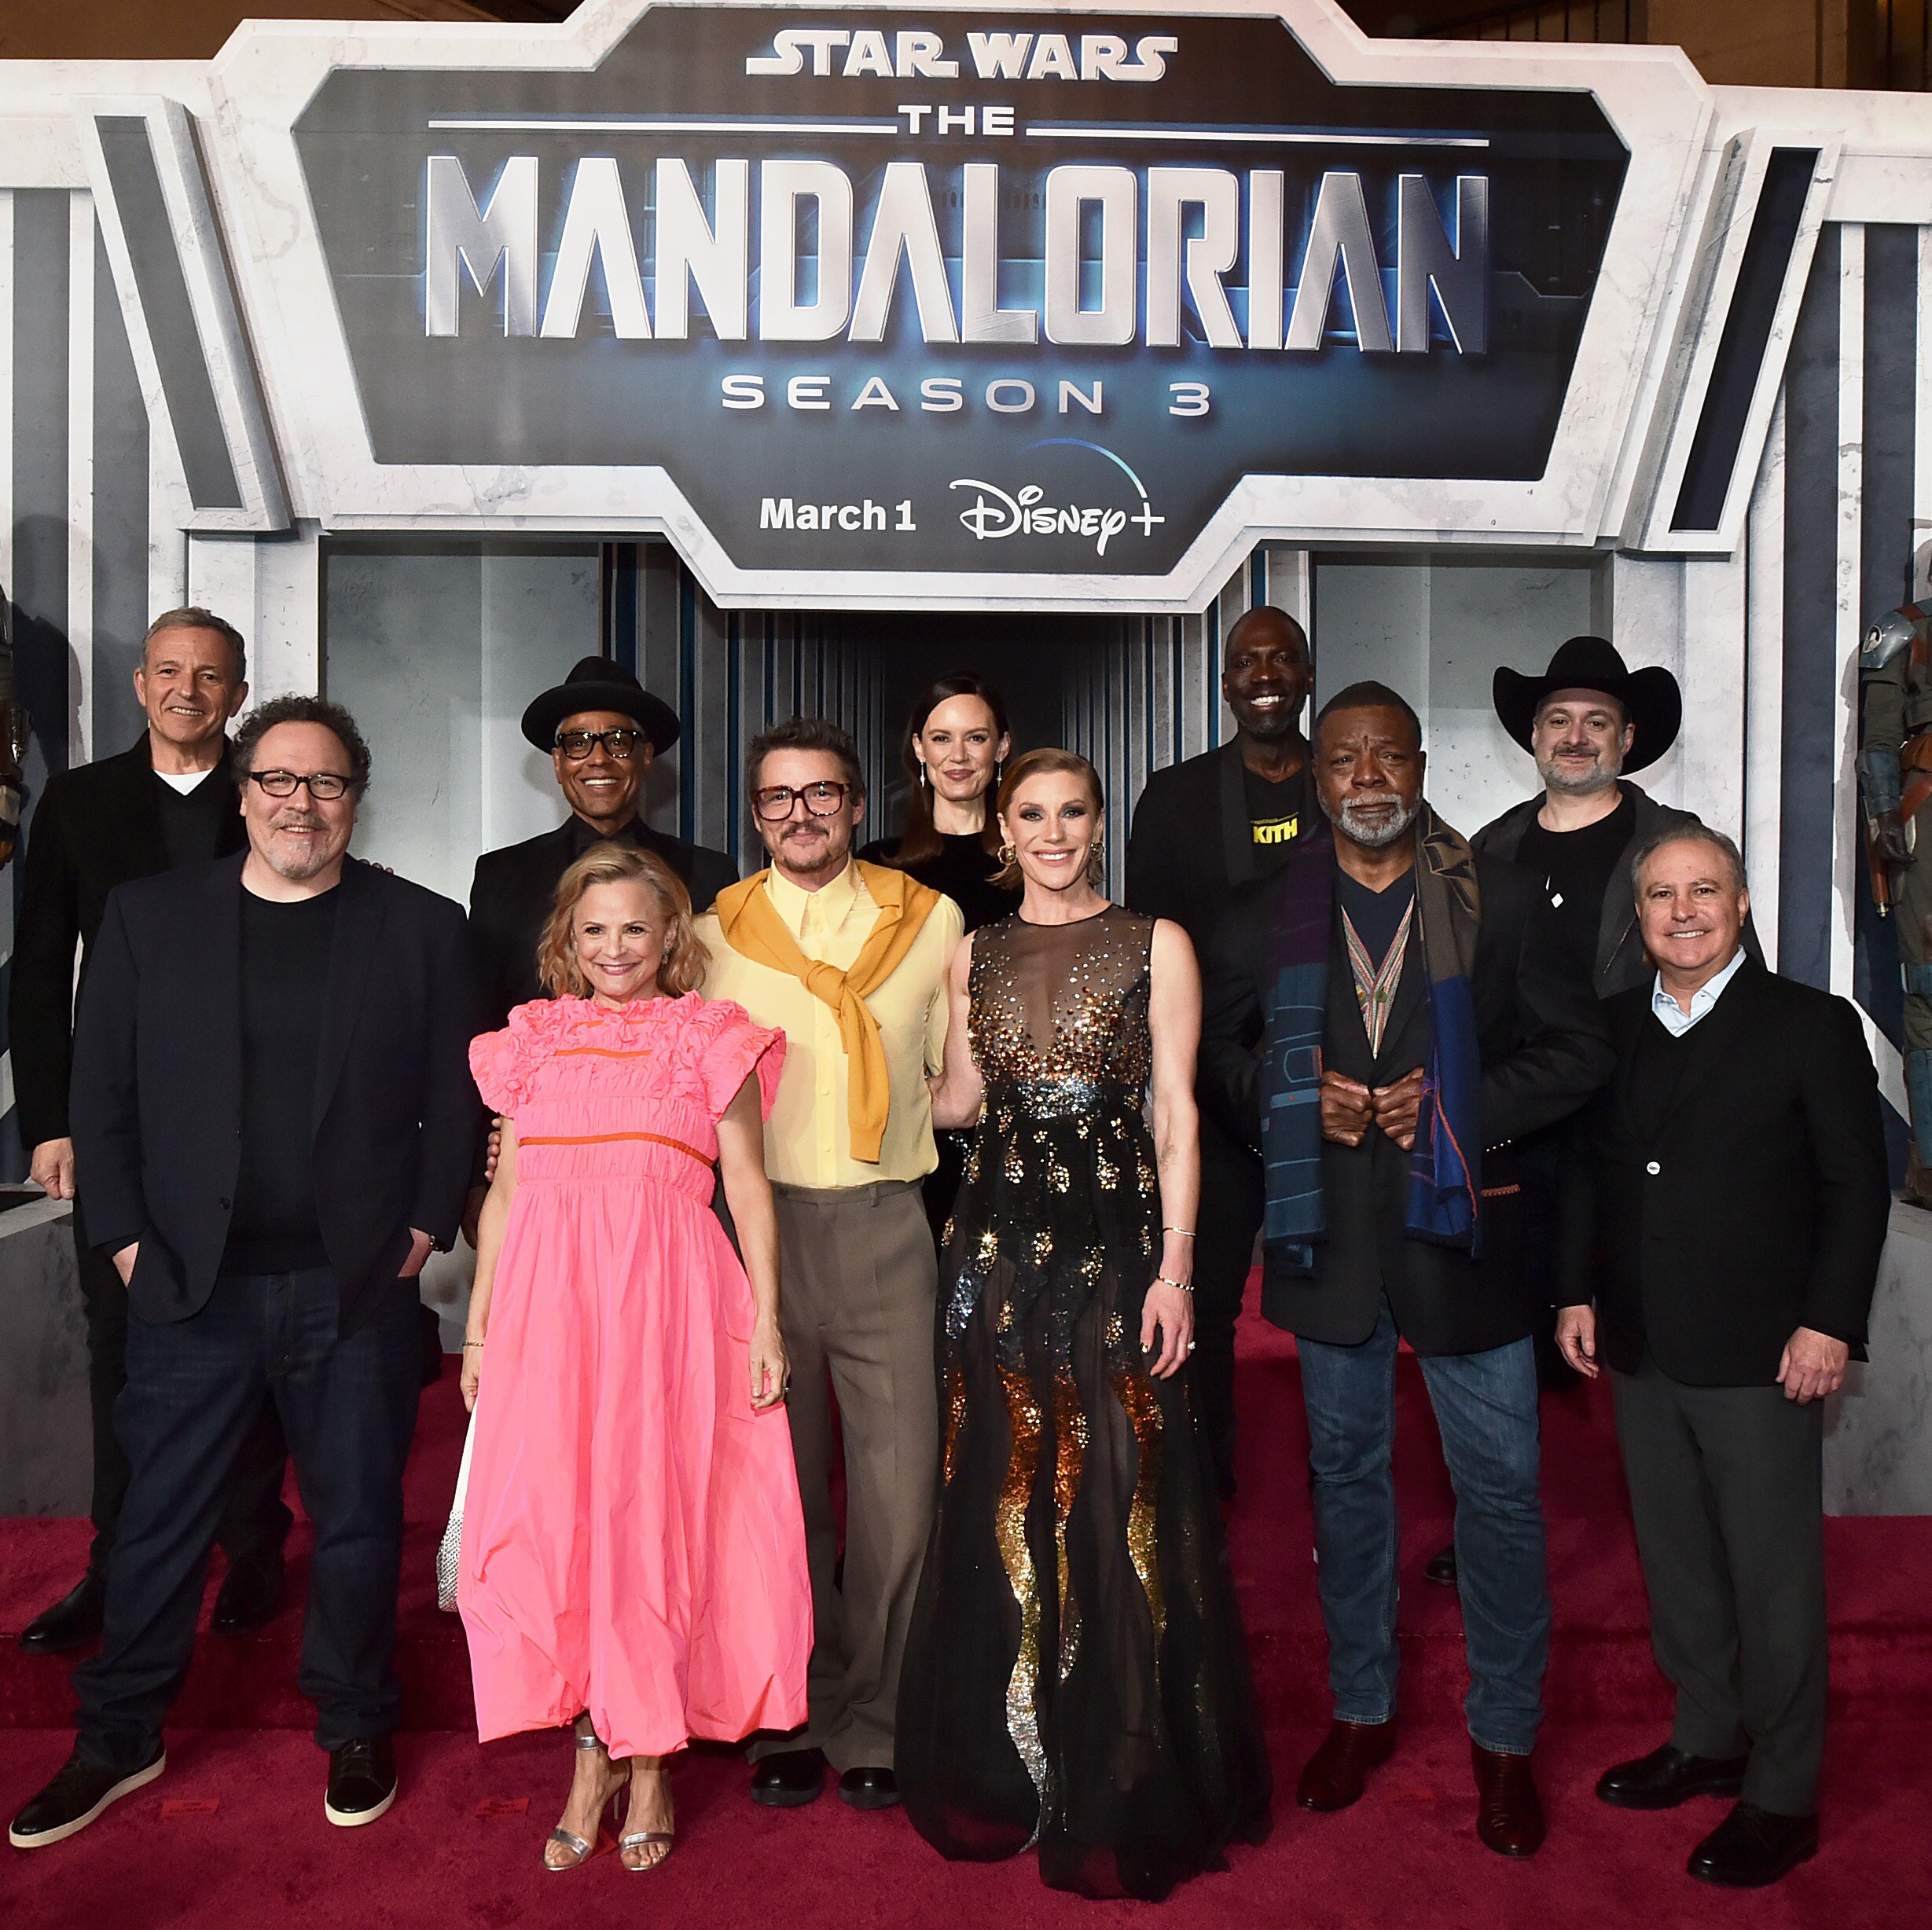 The Mandalorian' Season 3 Schedule: Episode 1 Lands on Disney Plus - CNET